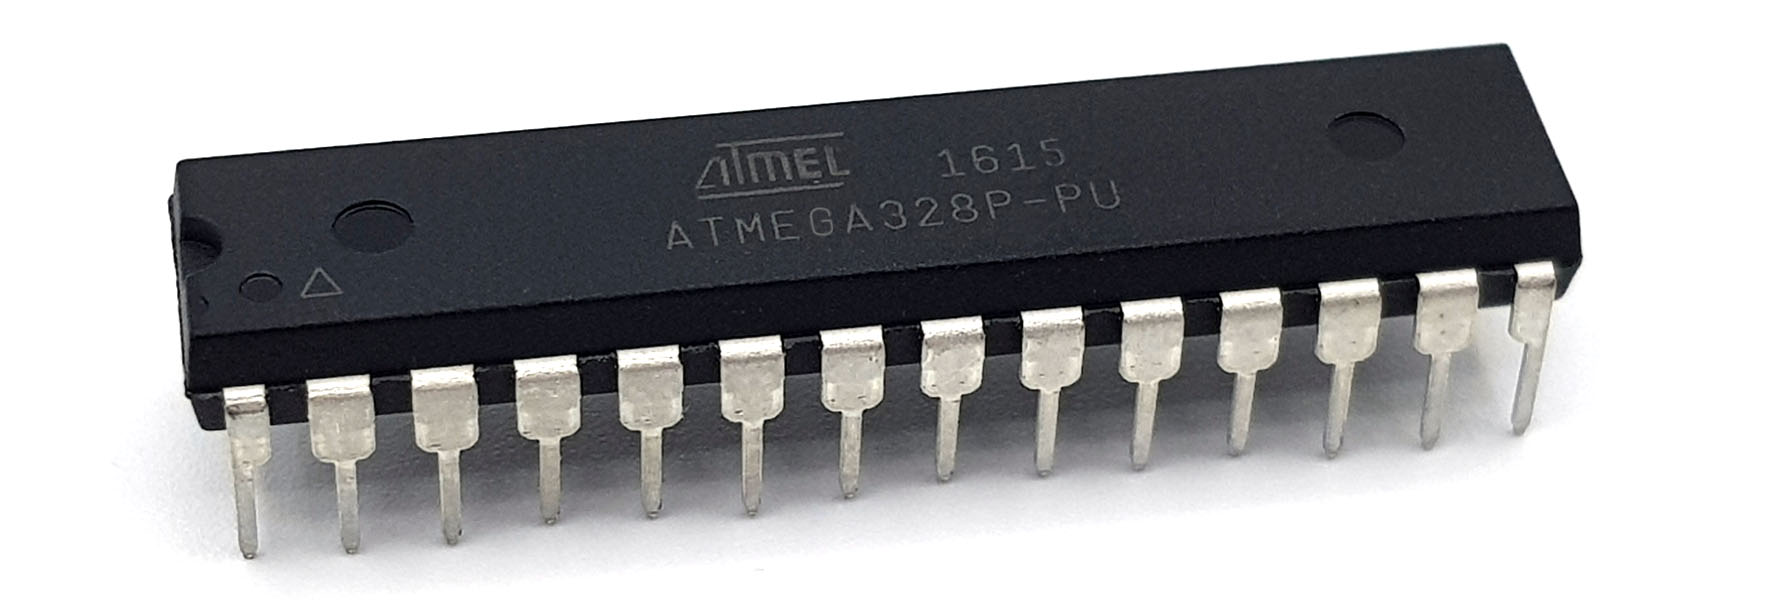 Stabiler ATMEGA328P-PU Mikrocontroller mit ARDUINO UNO R3 Bootloader Neu 